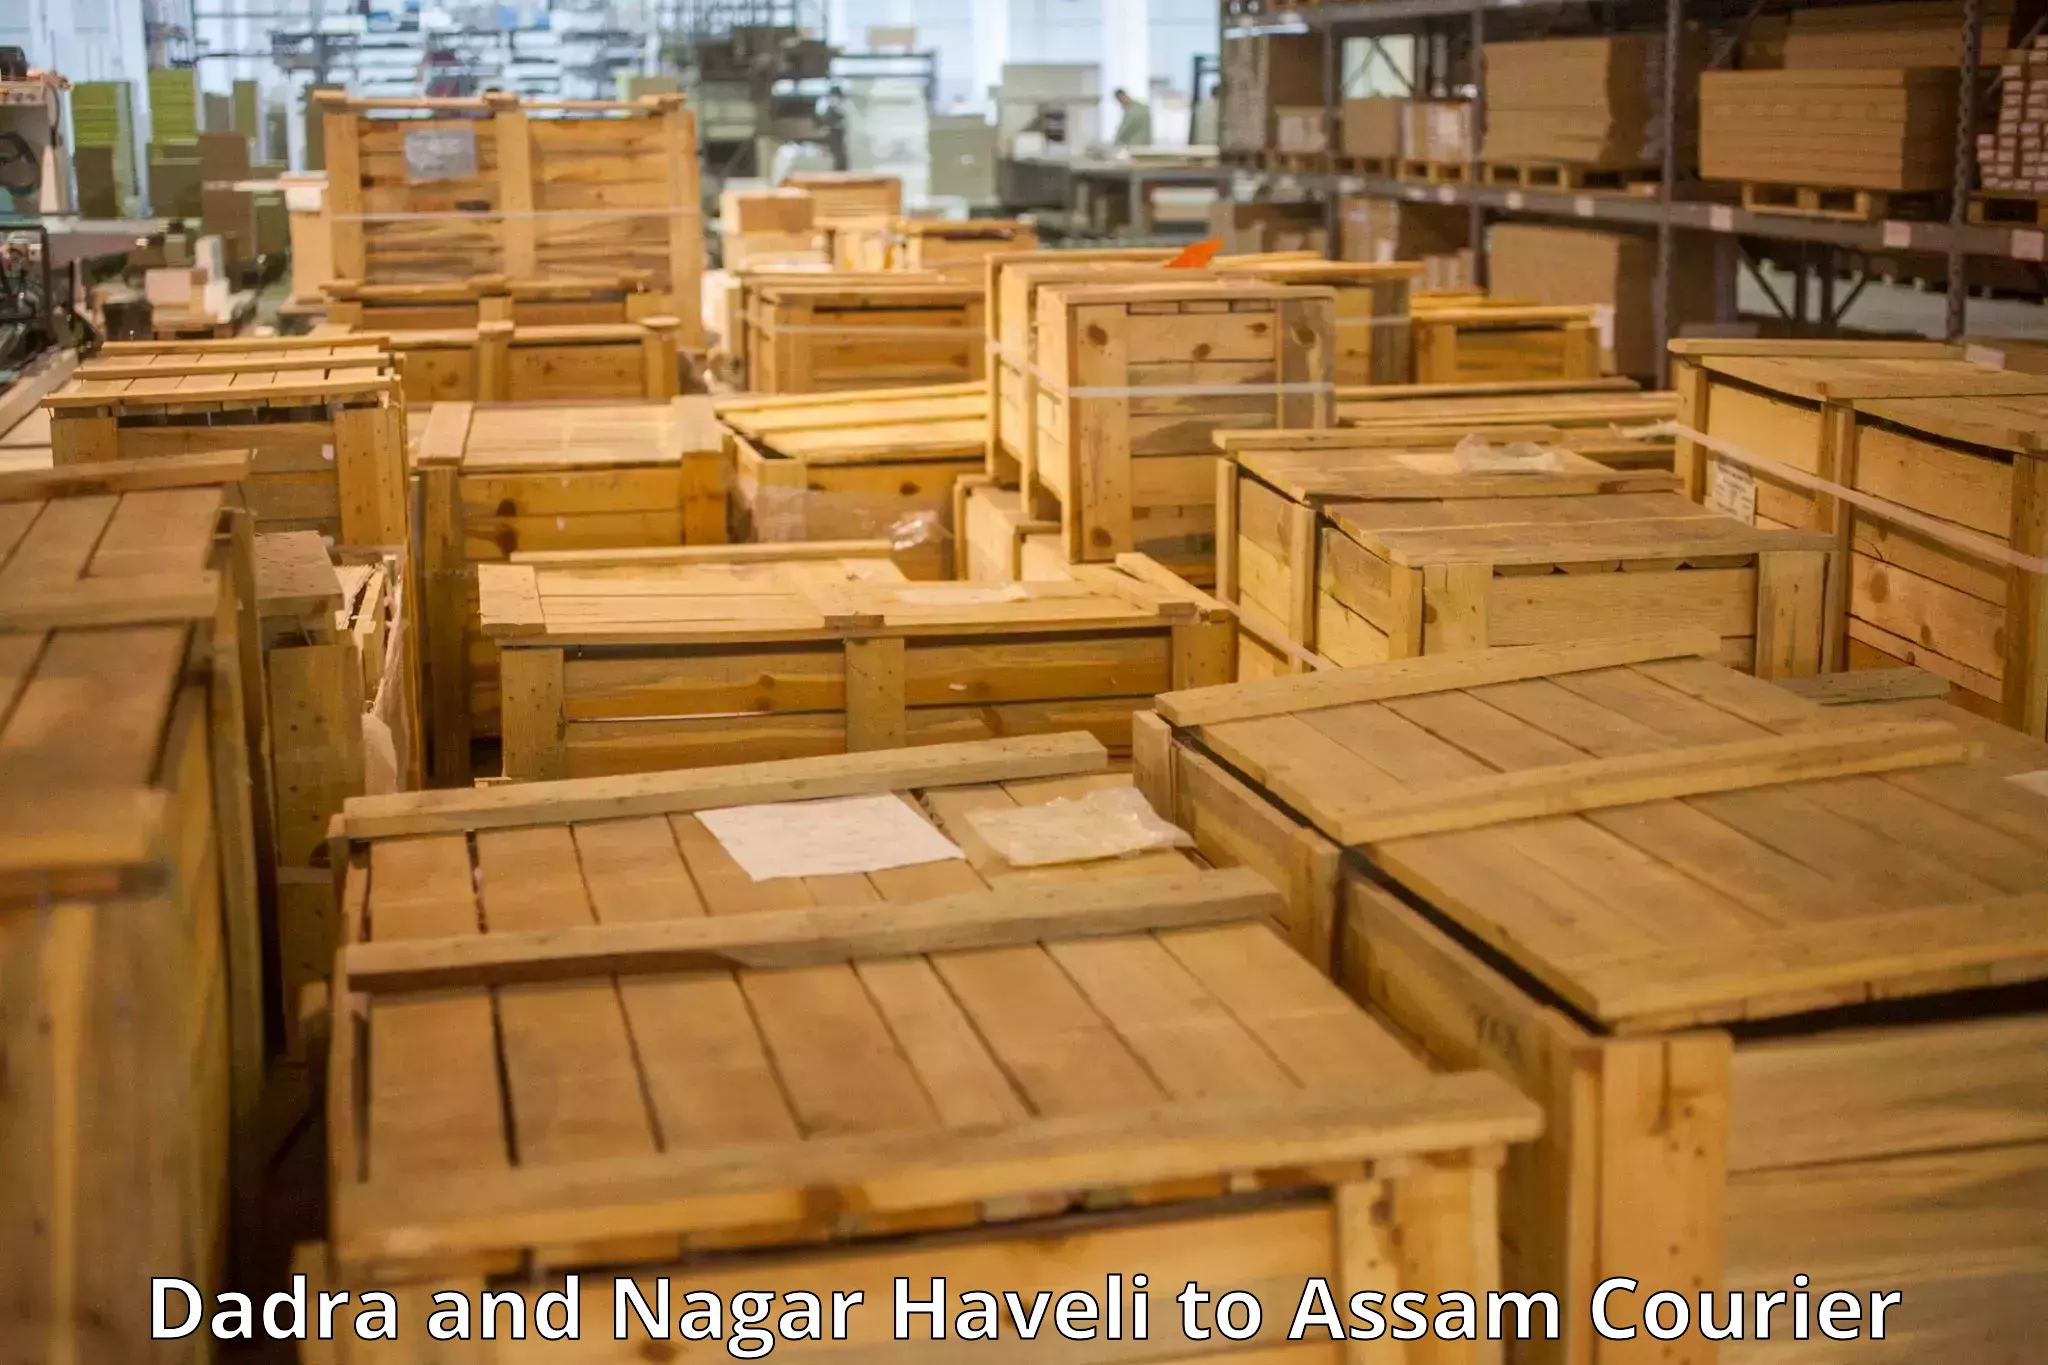 Luggage delivery network Dadra and Nagar Haveli to Guwahati